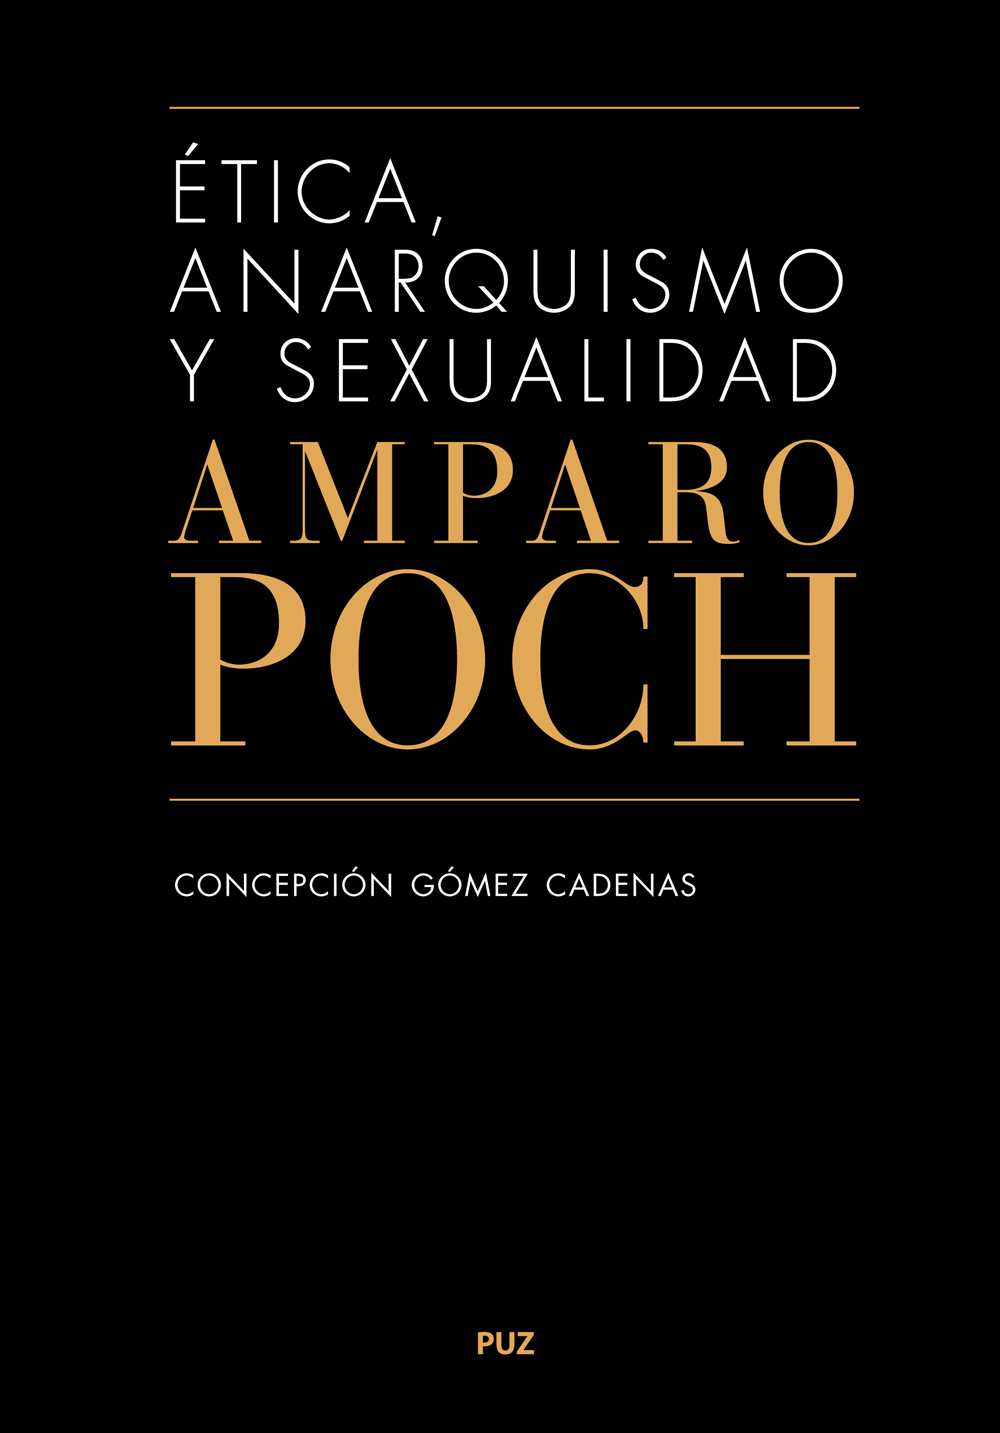 Amparo Poch